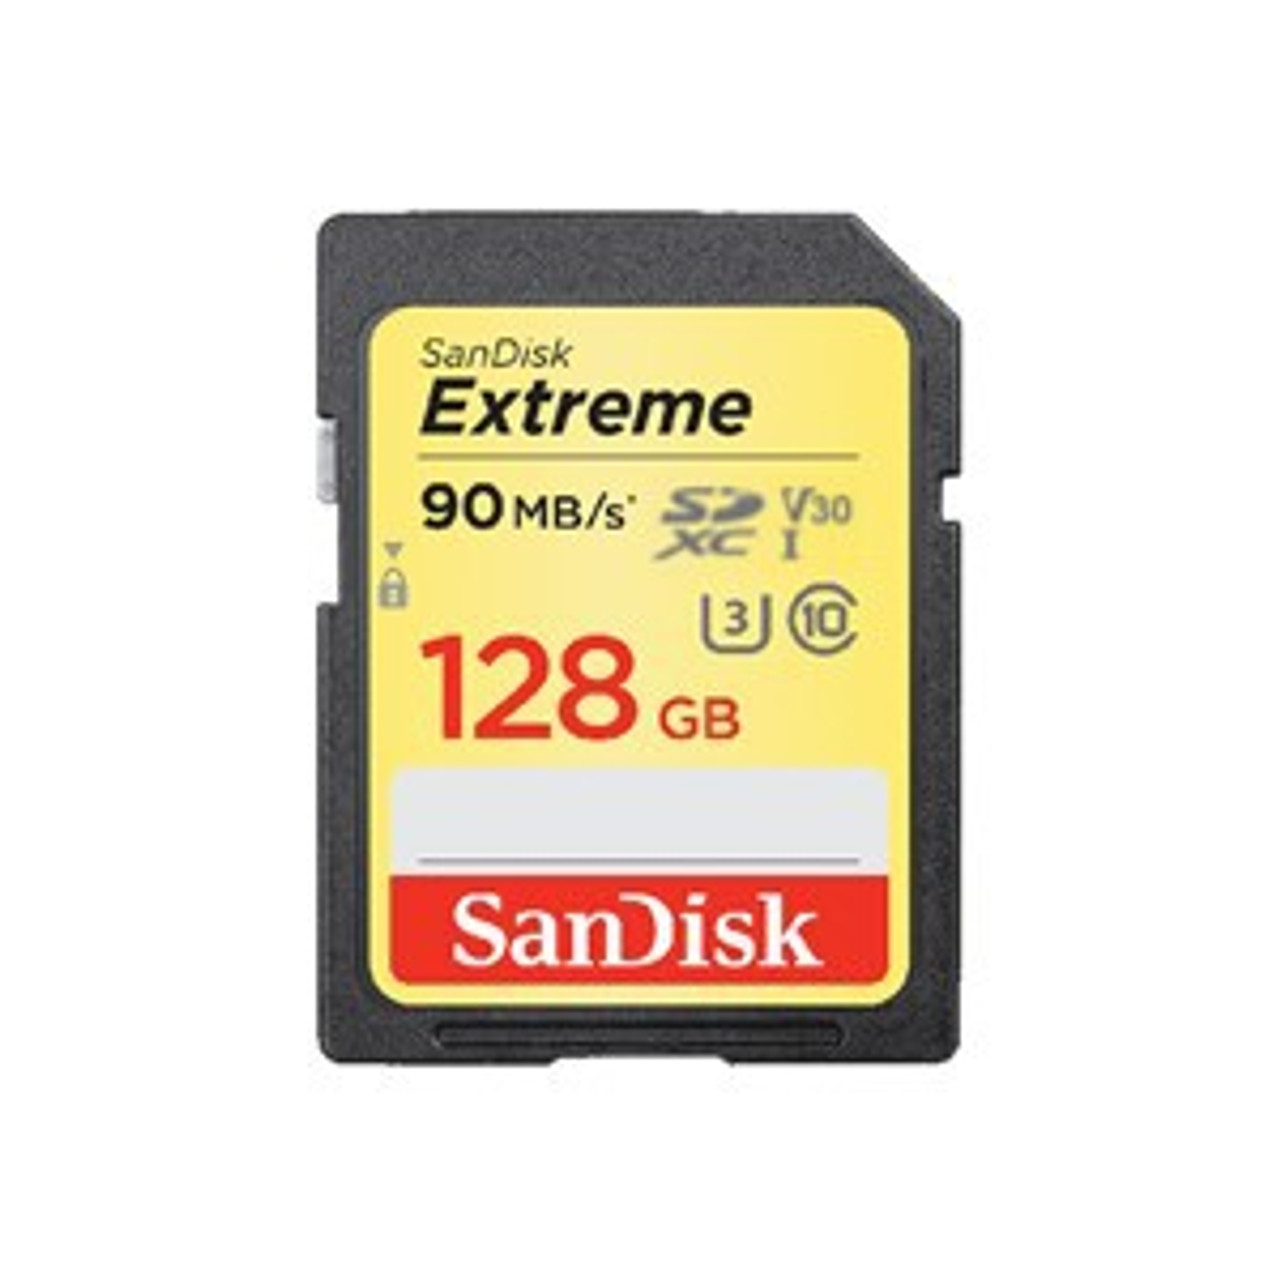 Sandisk Extreme 128GB 90MB/s UHS-I U3 V30 SDXC Card